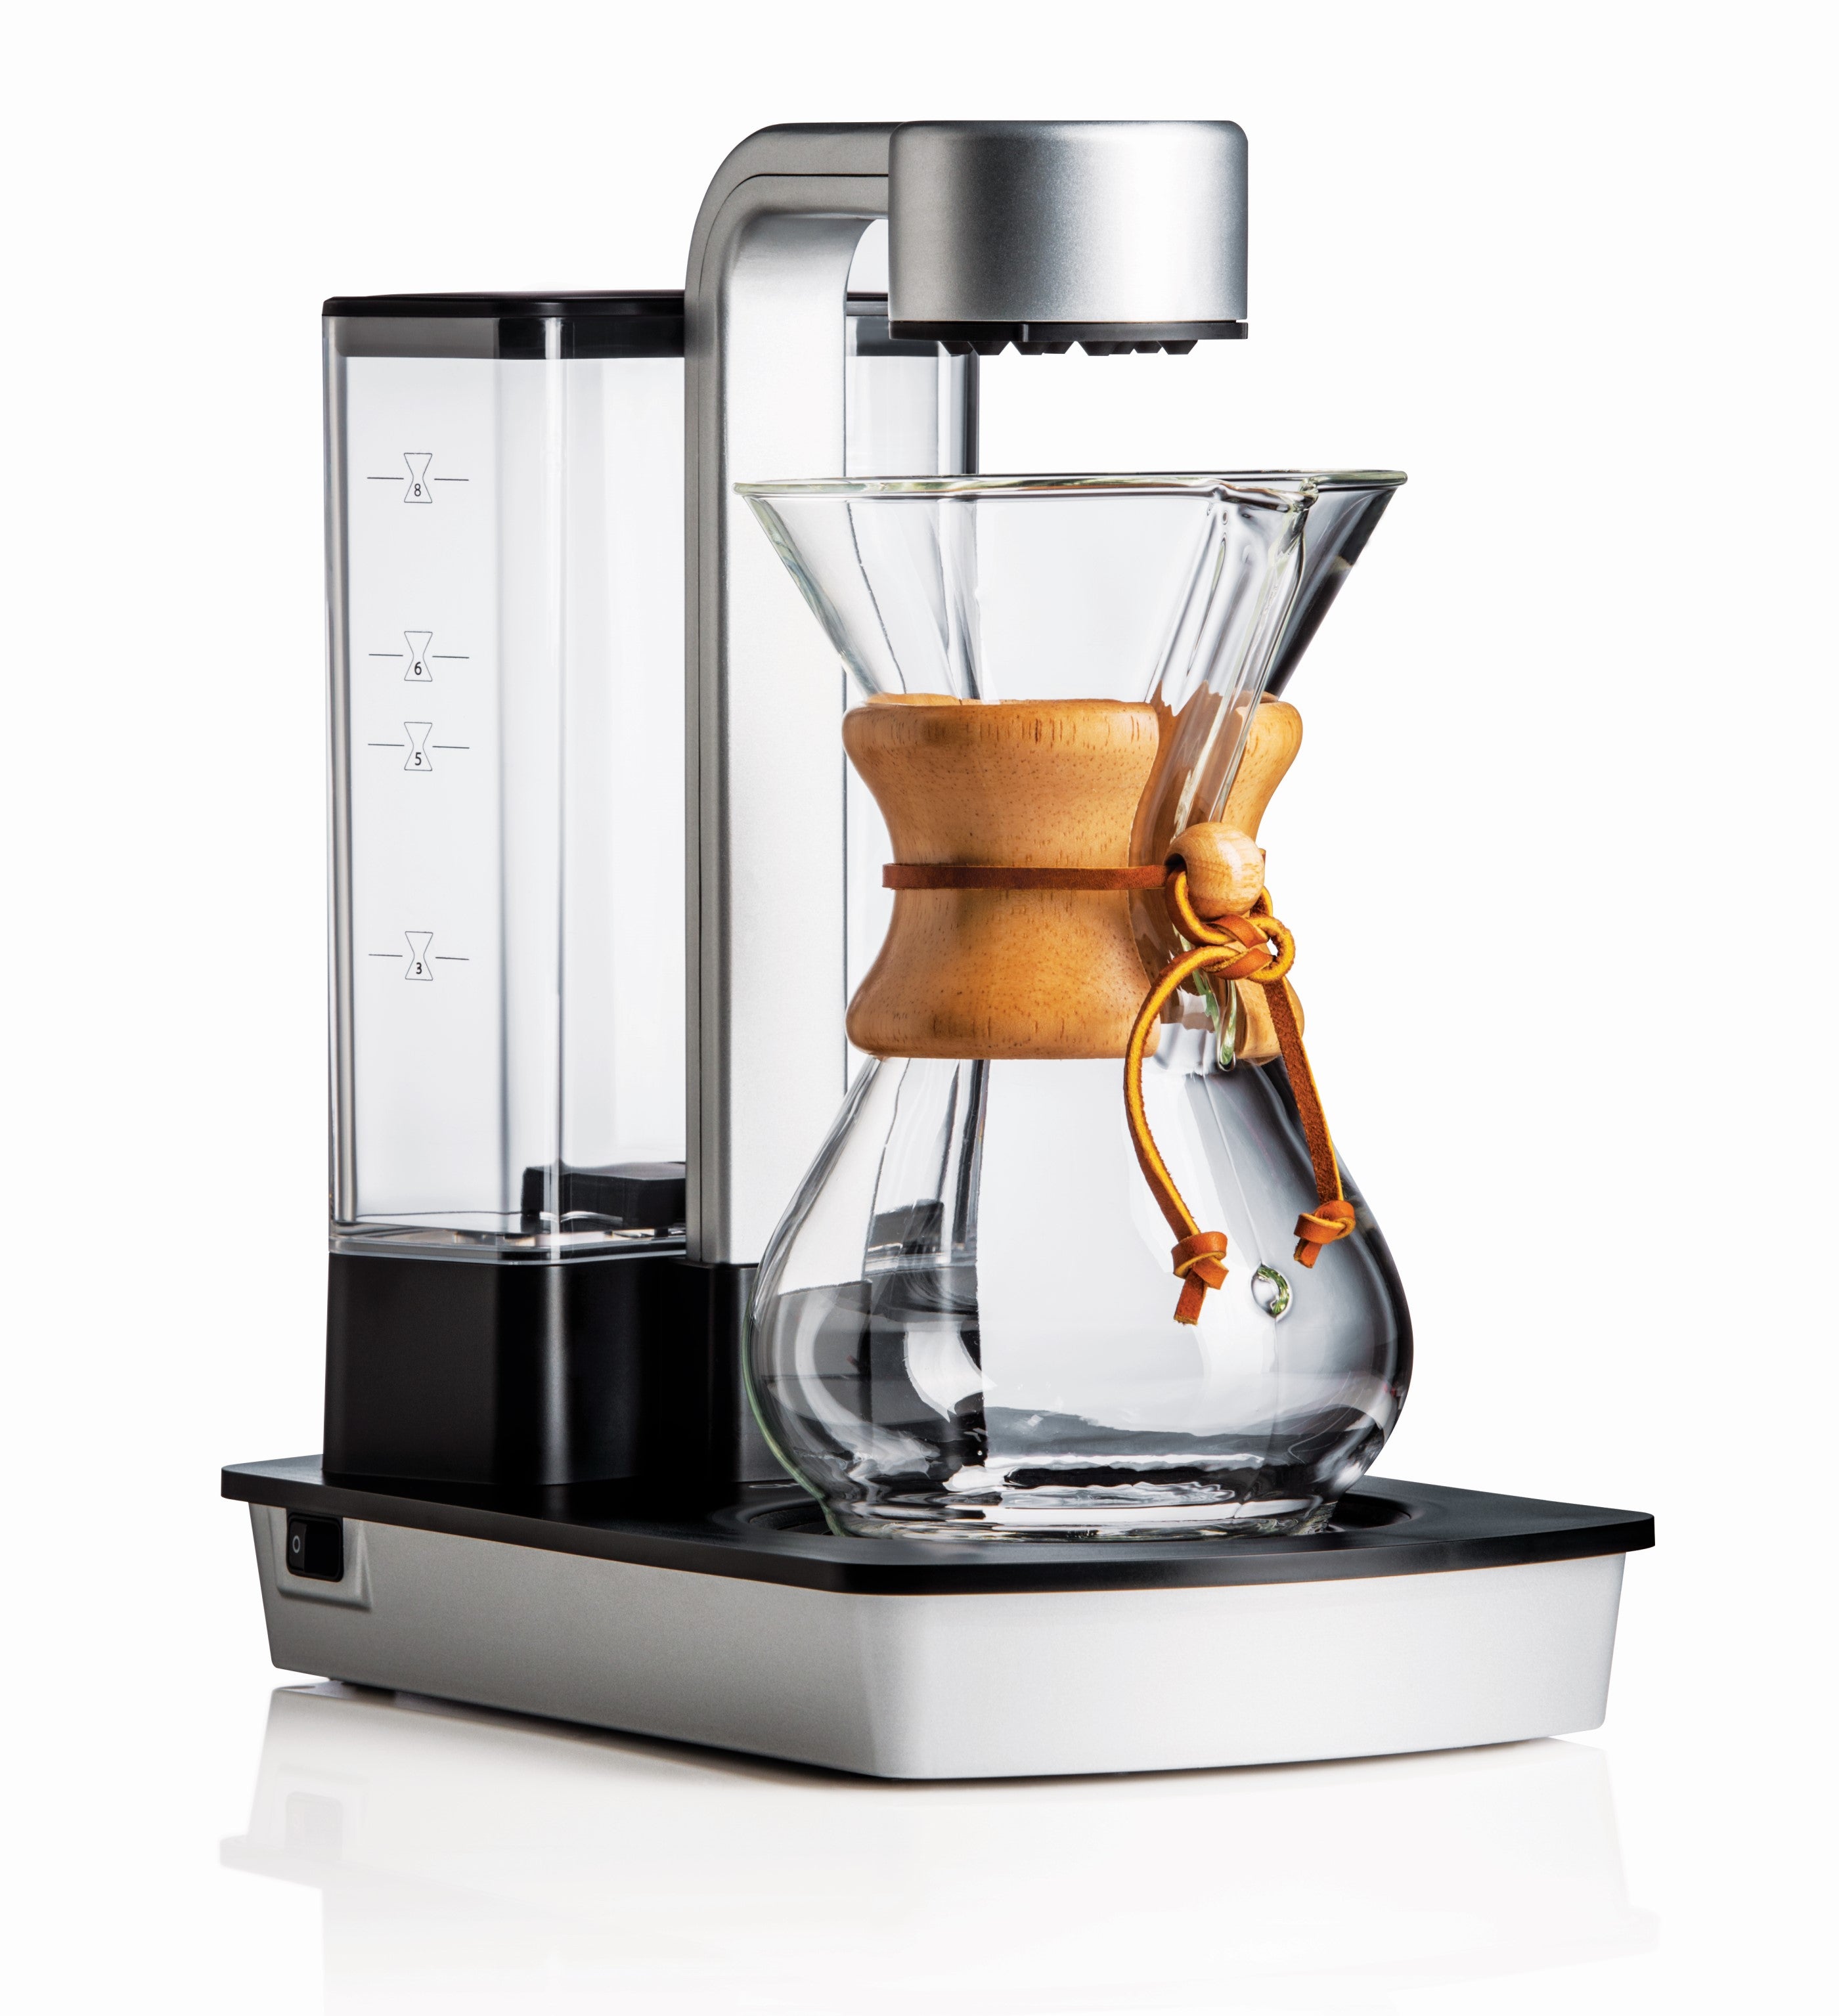 Chemex 6 Cup Glass Coffee Maker